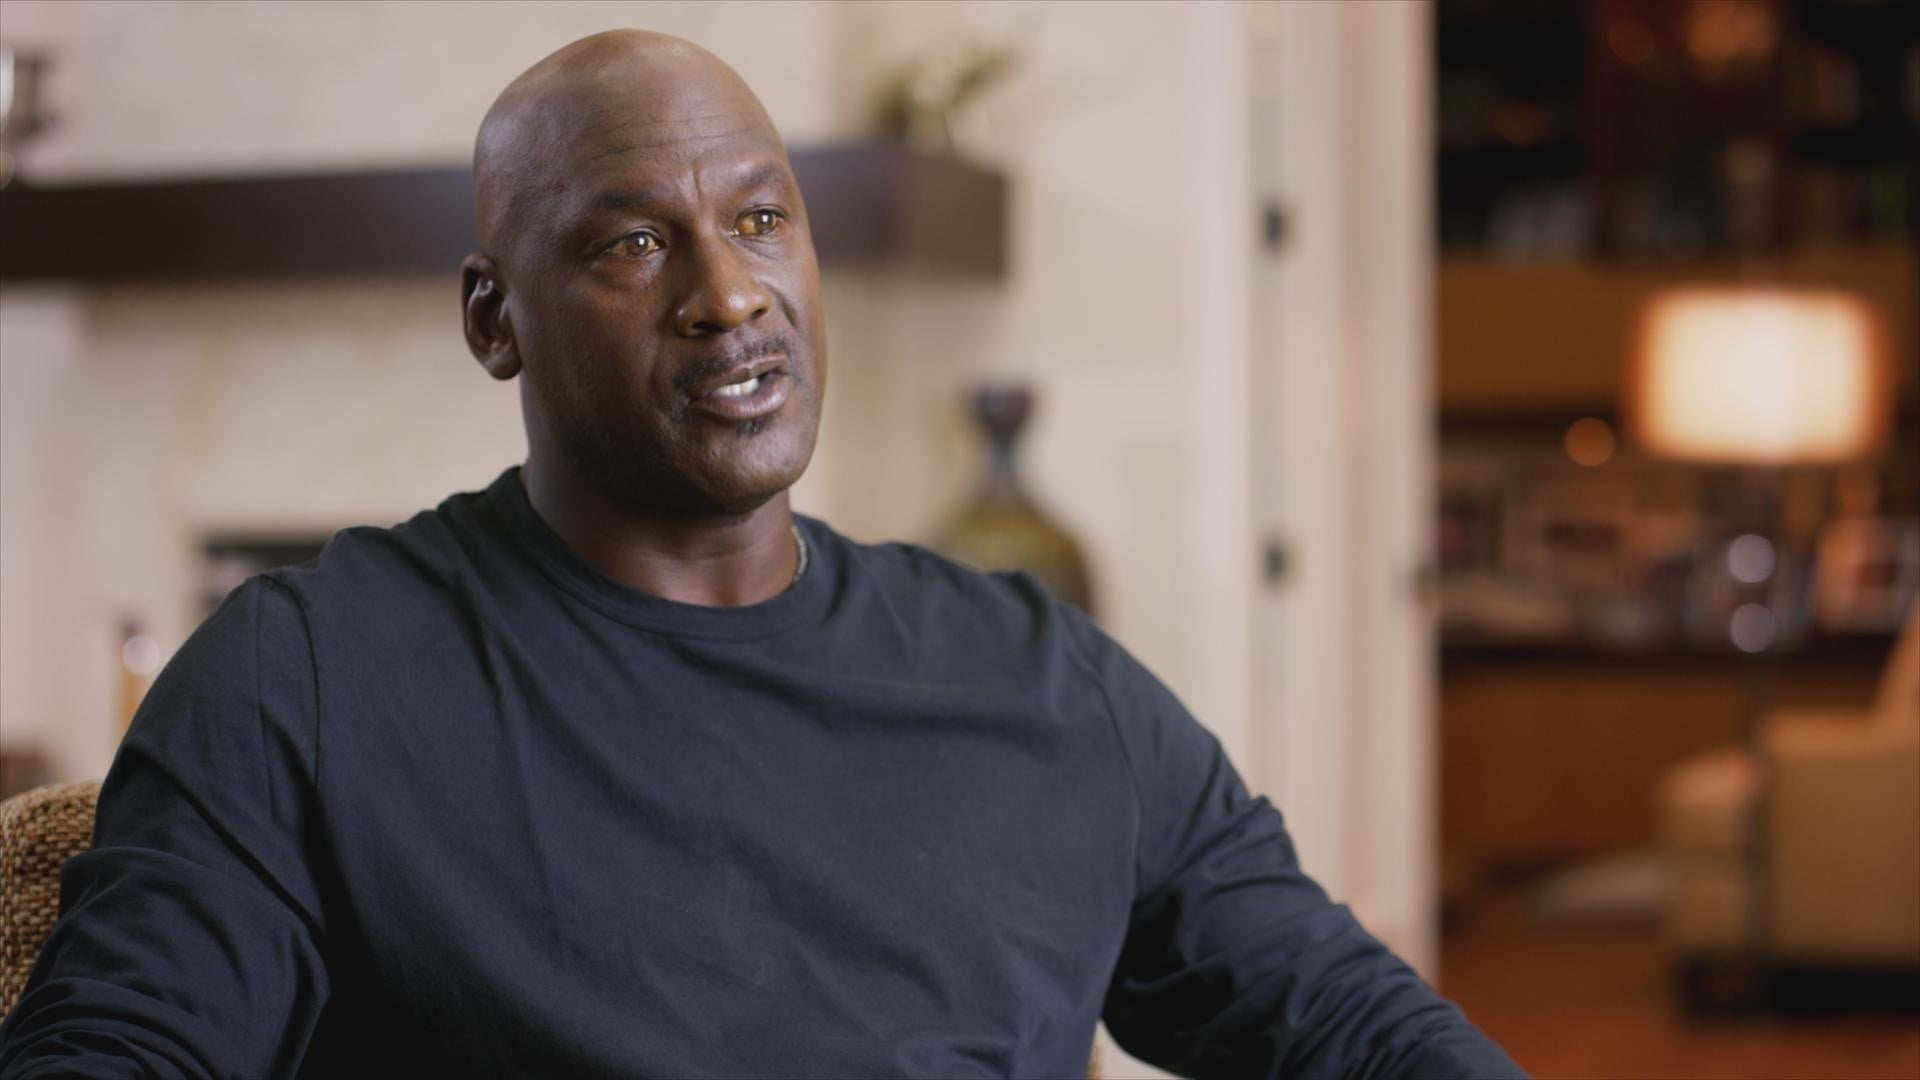 Where Was Michael Jordan's The Last Dance Interview Filmed?